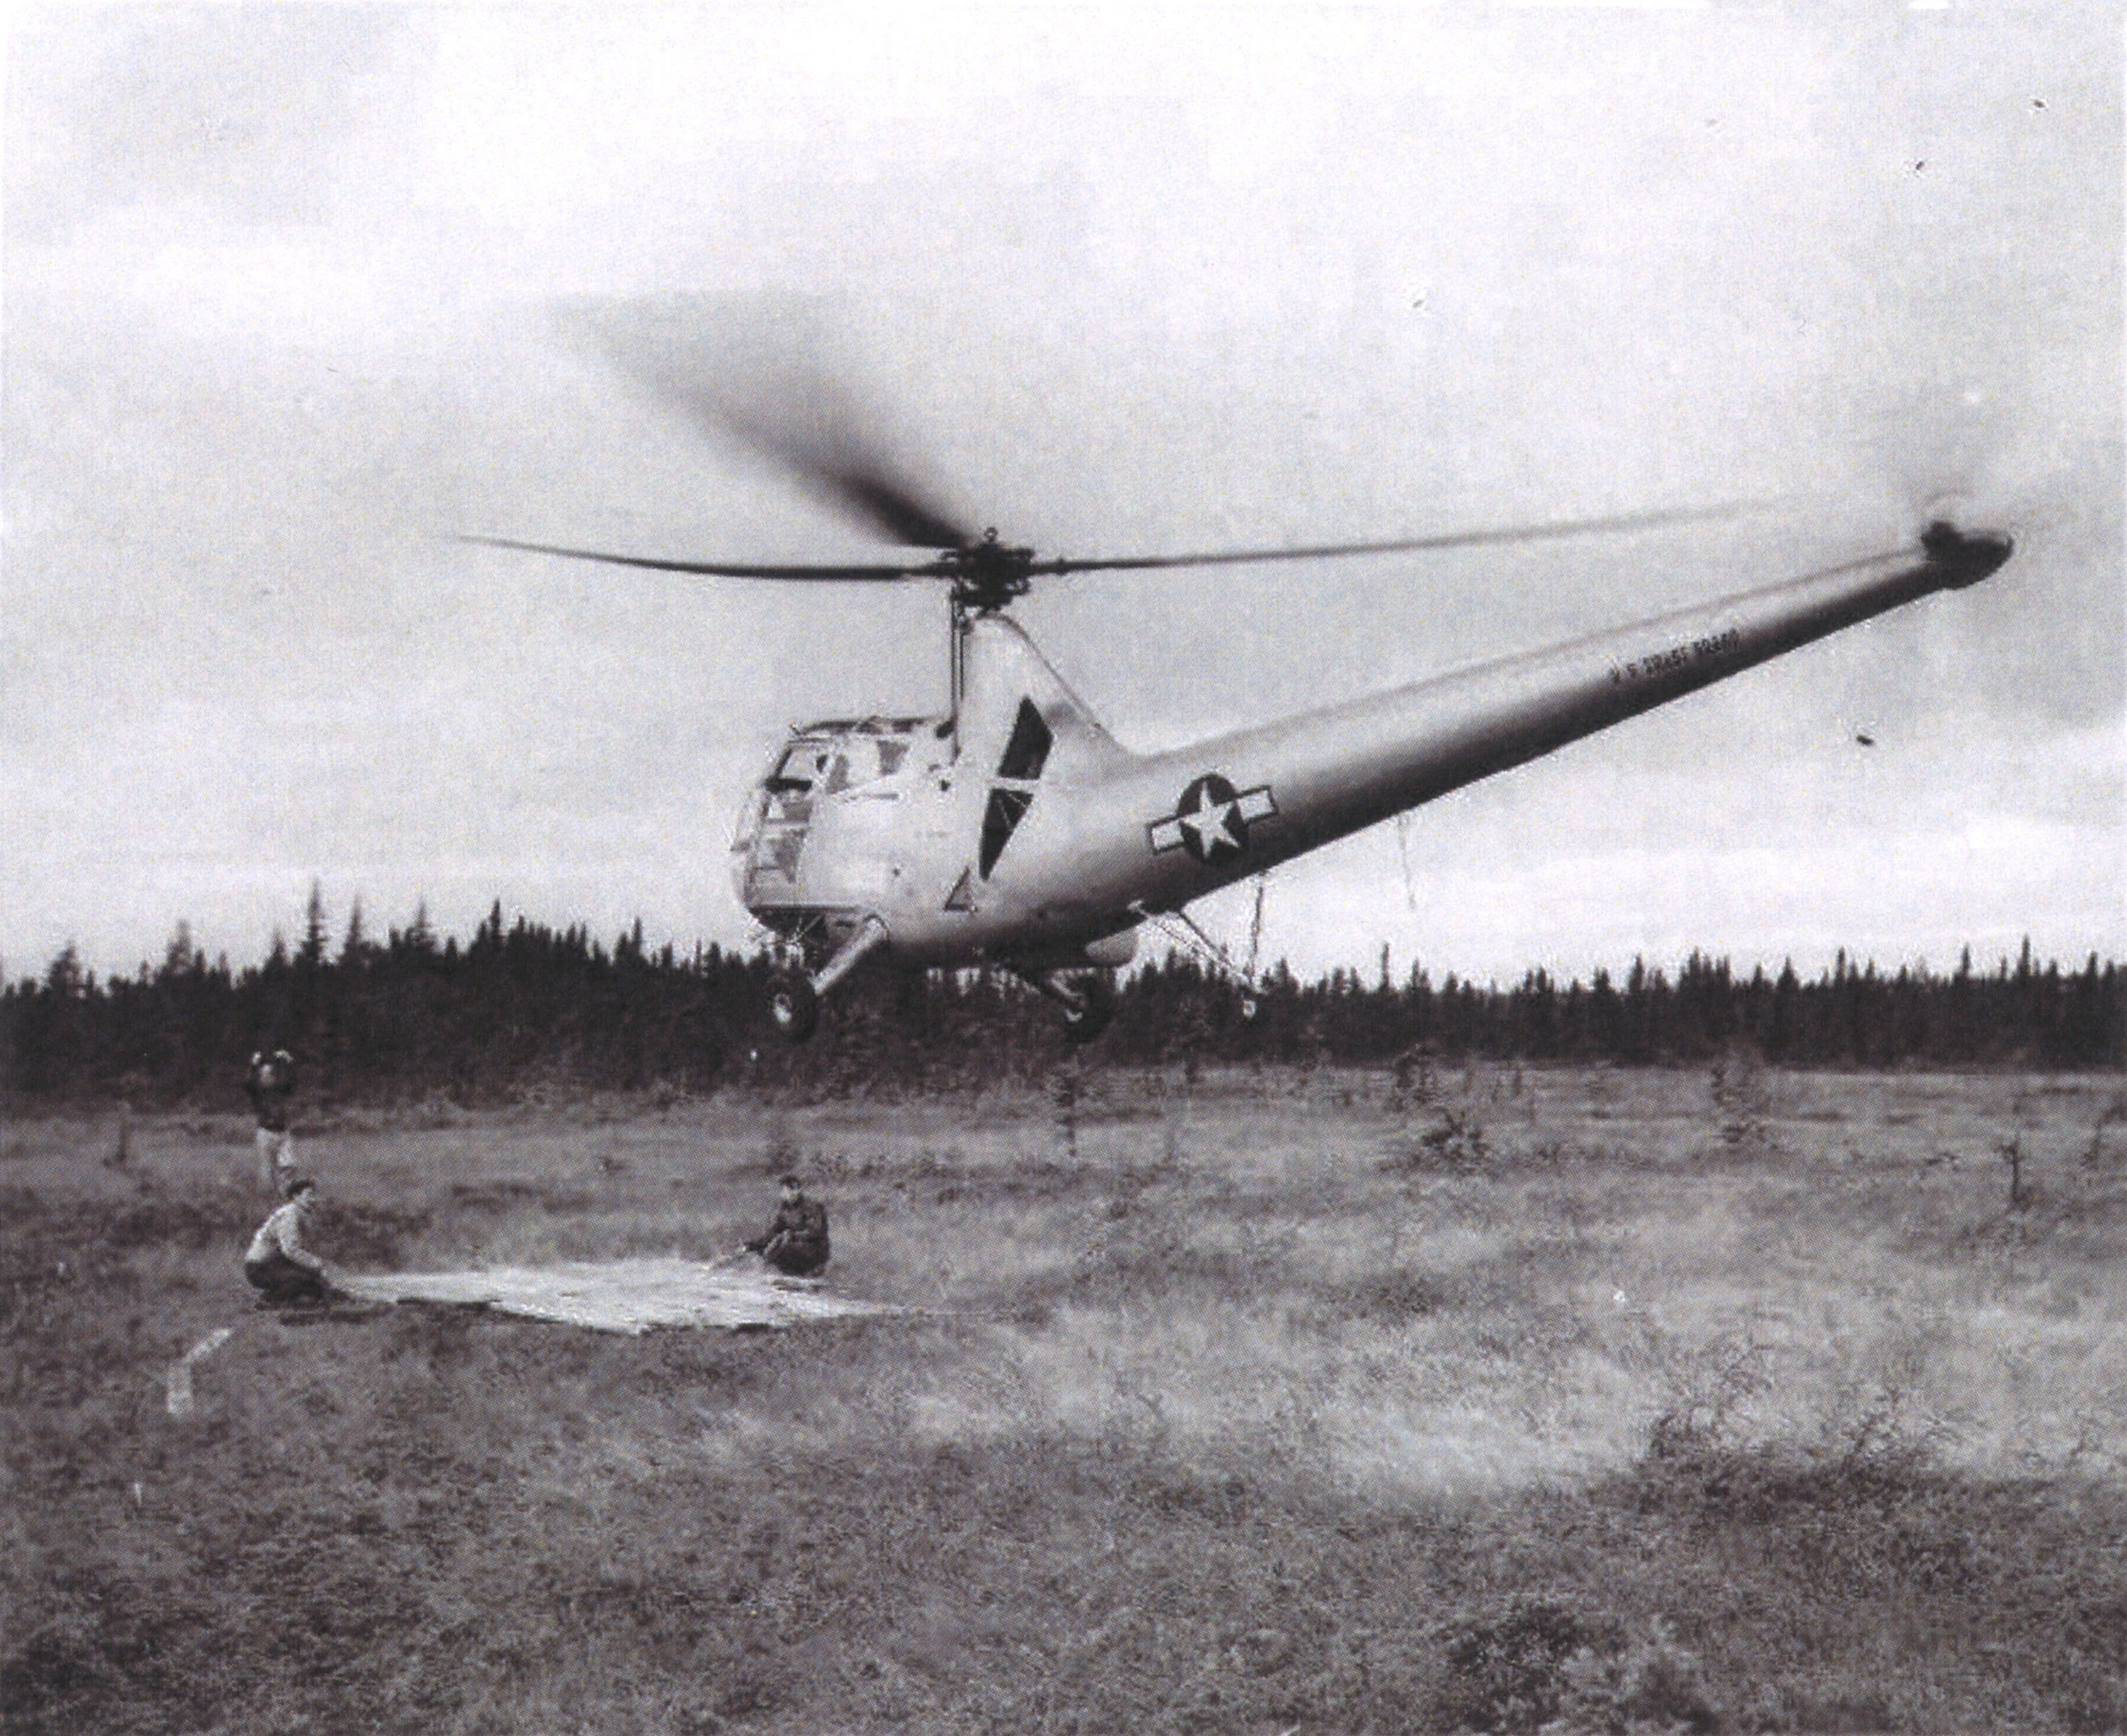 A Coast Guard Sikorsky HOS-1 landing on a makeshift landing pad placed on the soft muskeg near the crash site. (U.S. Coast Guard)